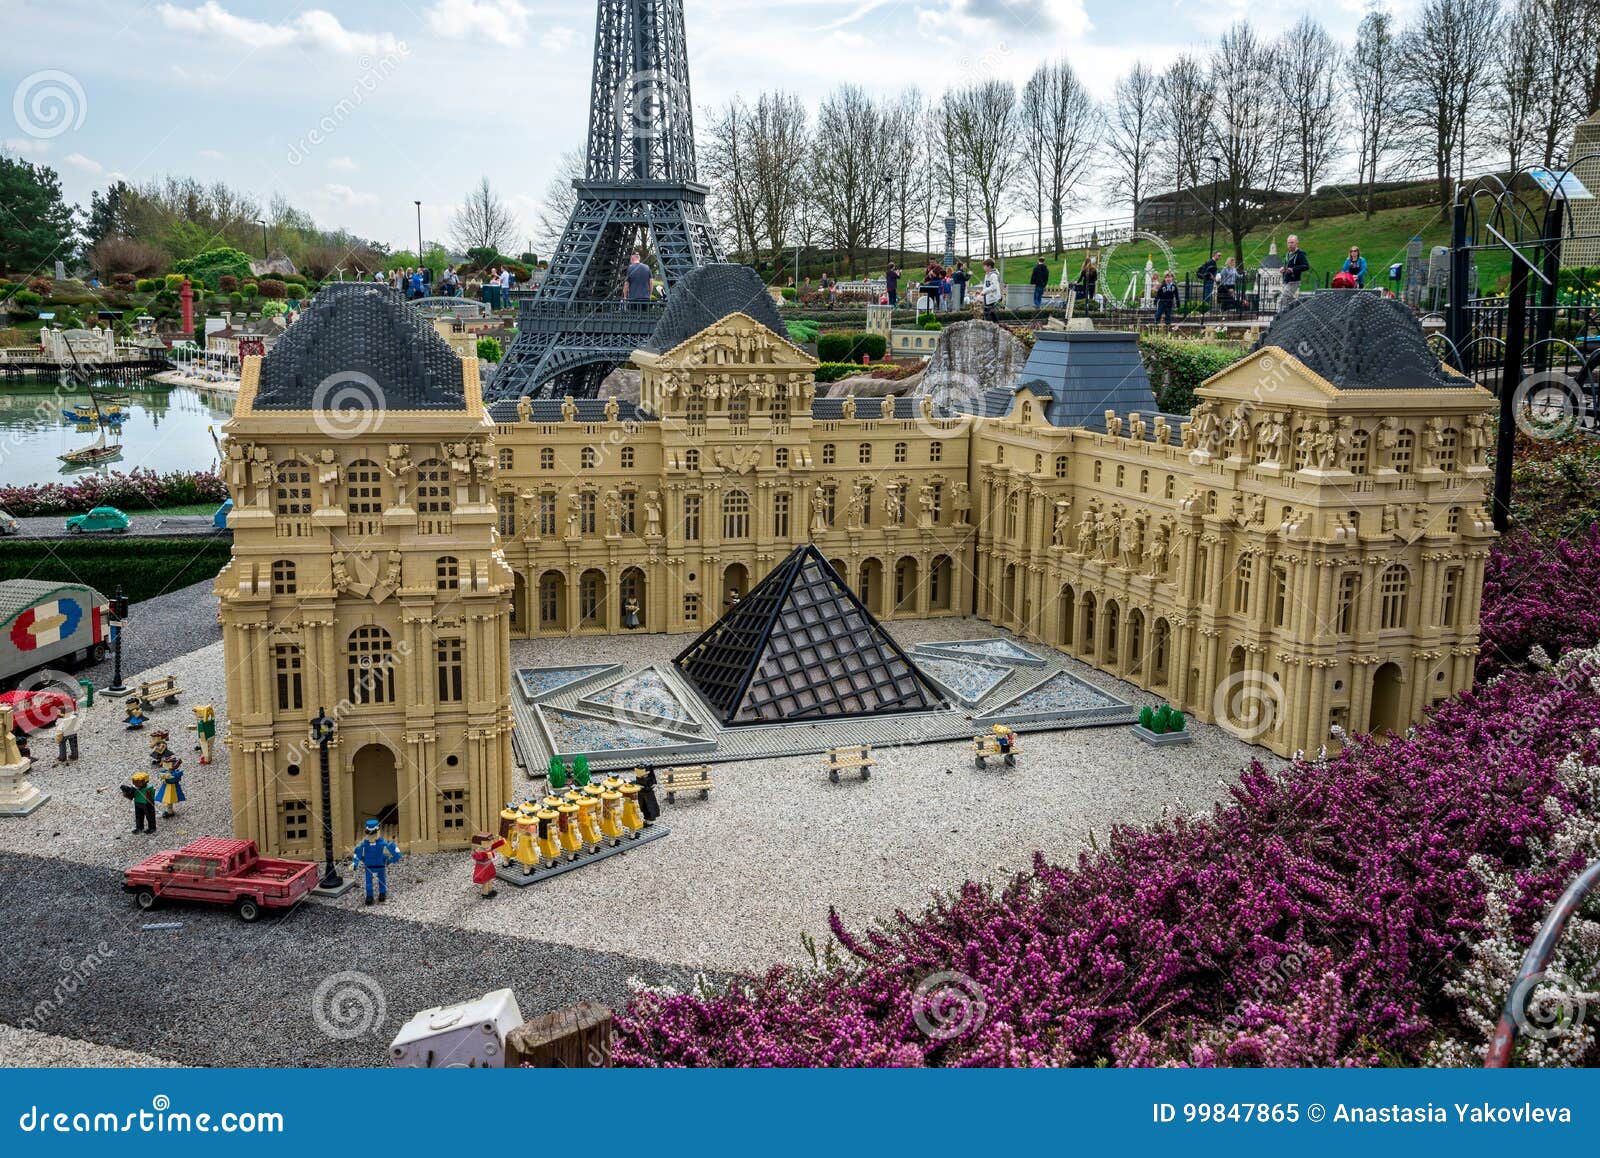 wakker worden Derde kiem The Louvre Museum LEGO Model Displayed at Legoland Windsor Miniland  Editorial Image - Image of legoland, square: 99847865